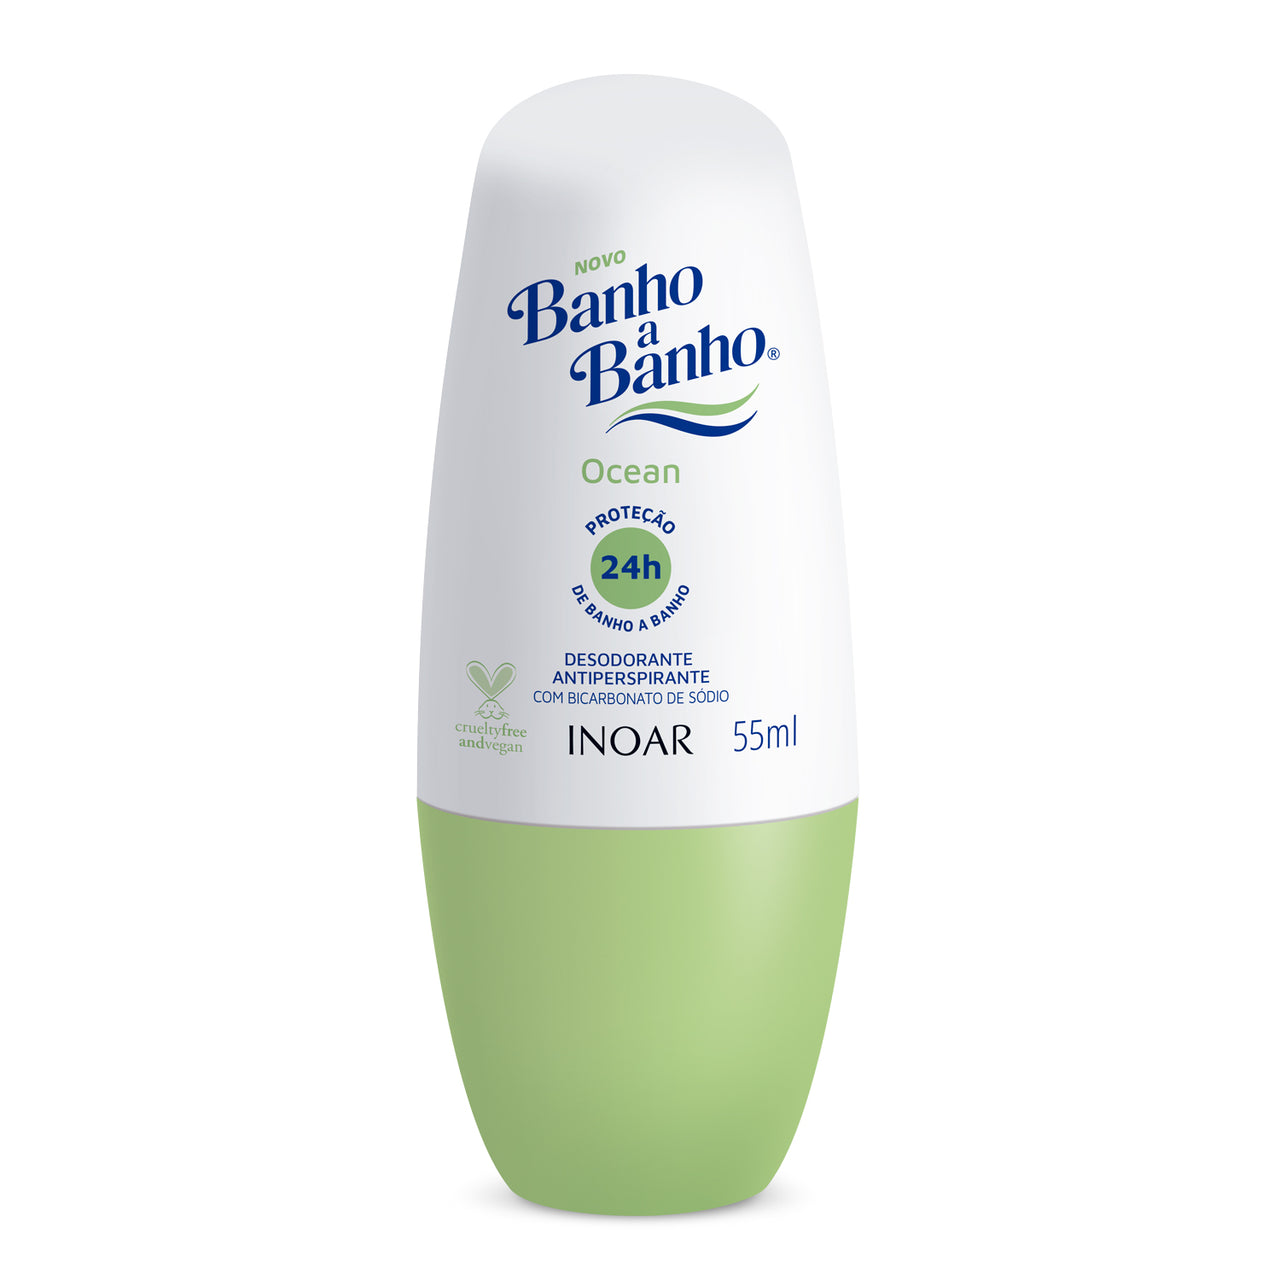 INOAR Banho a Banho Ocean - rutulinis dezodorantas 55 ml